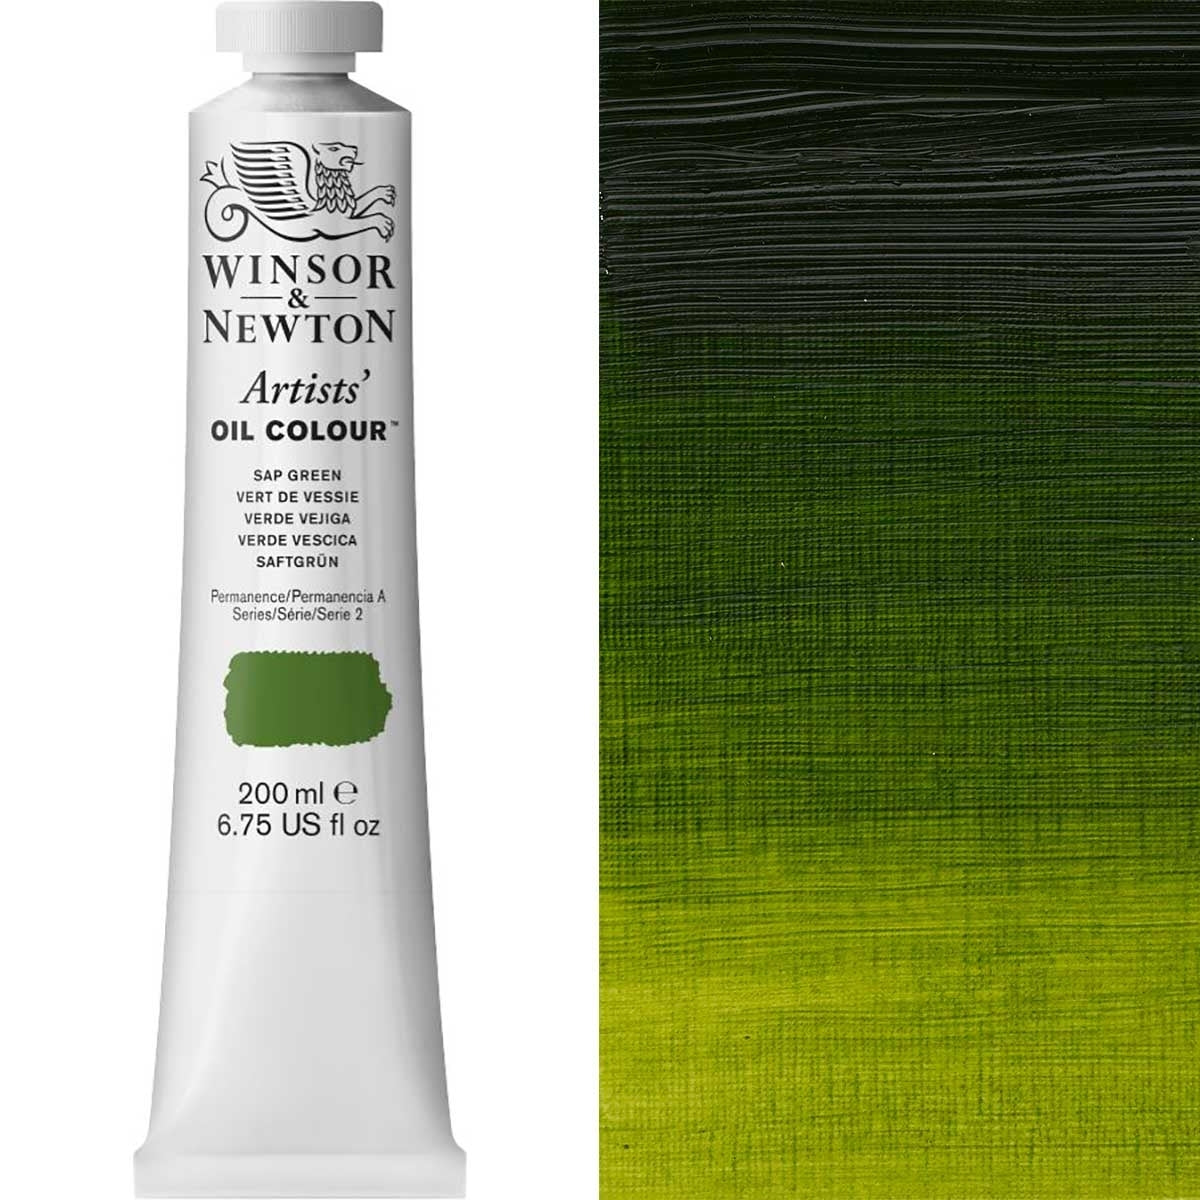 Winsor and Newton - Artists' Oil Colour - 200ml - Sap Green